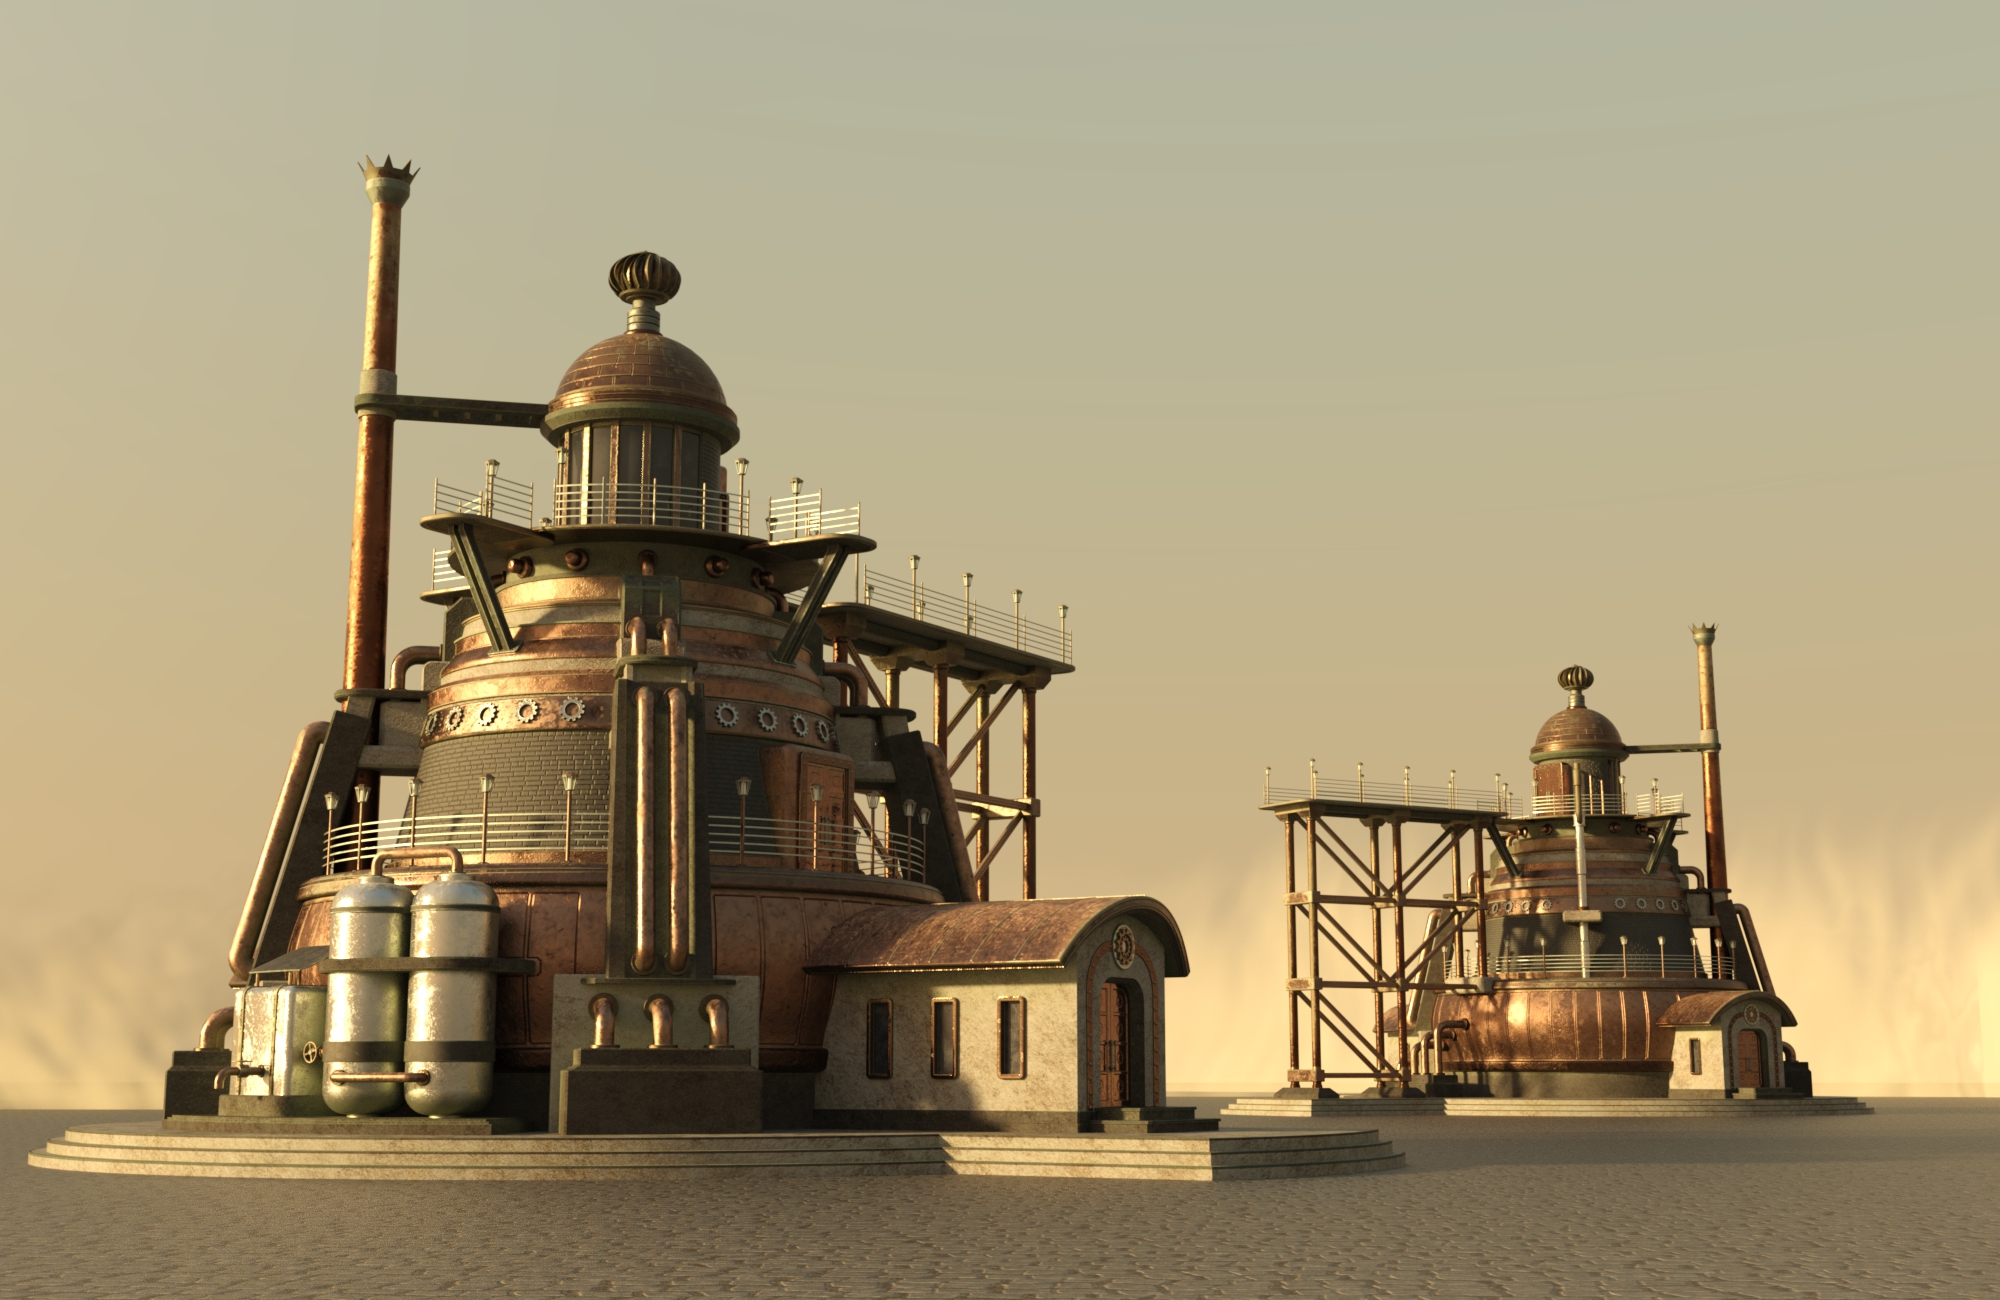 SC20 Outpost by: FToRi, 3D Models by Daz 3D